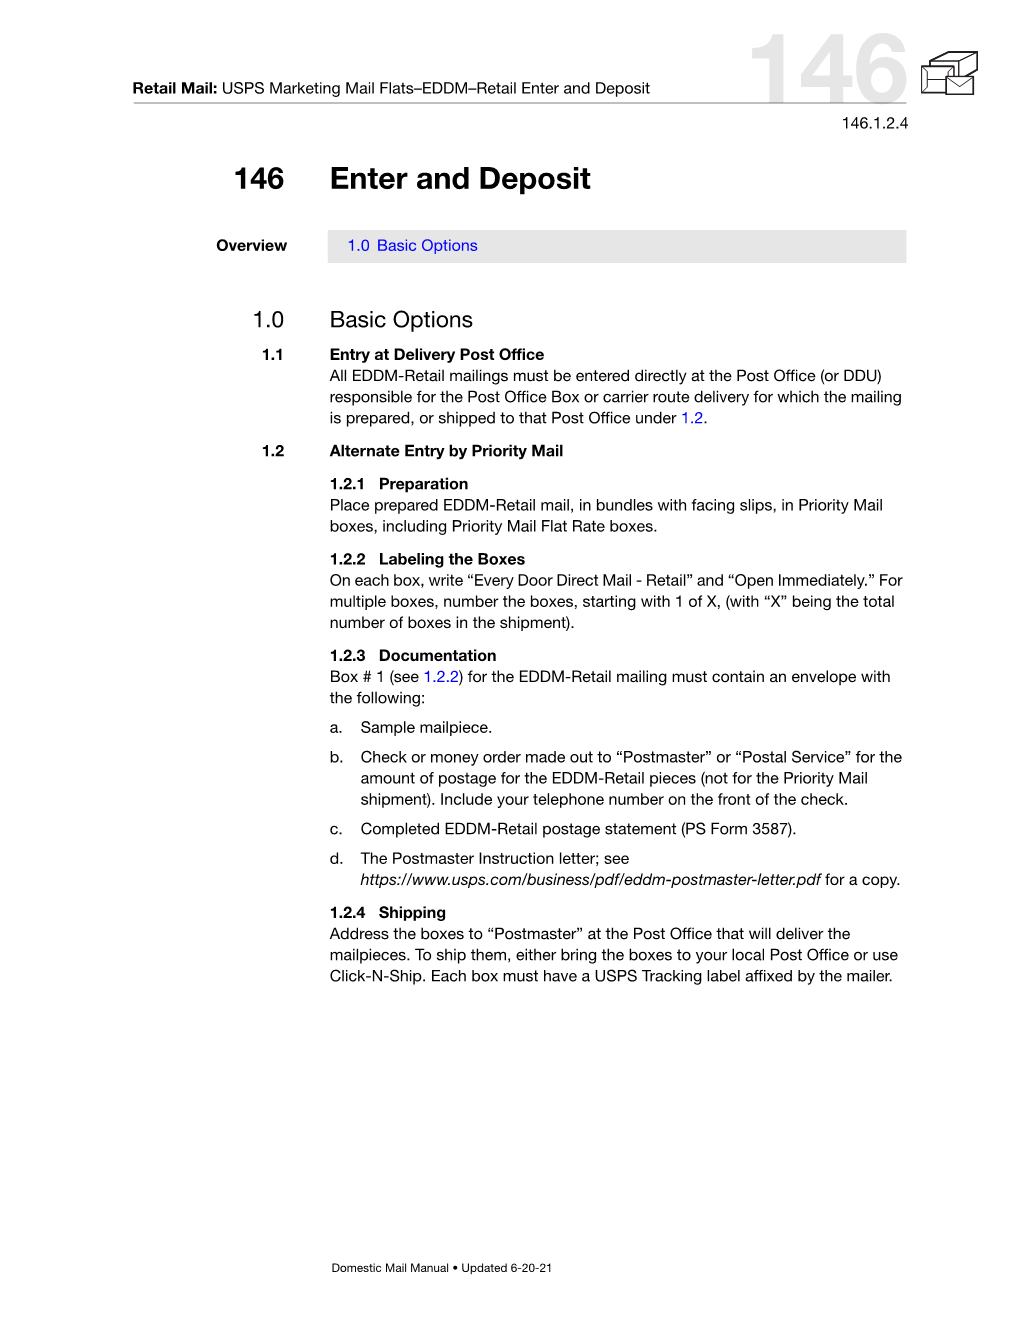 DMM 146 Standard Mail Flats-EDDM Enter and Deposit